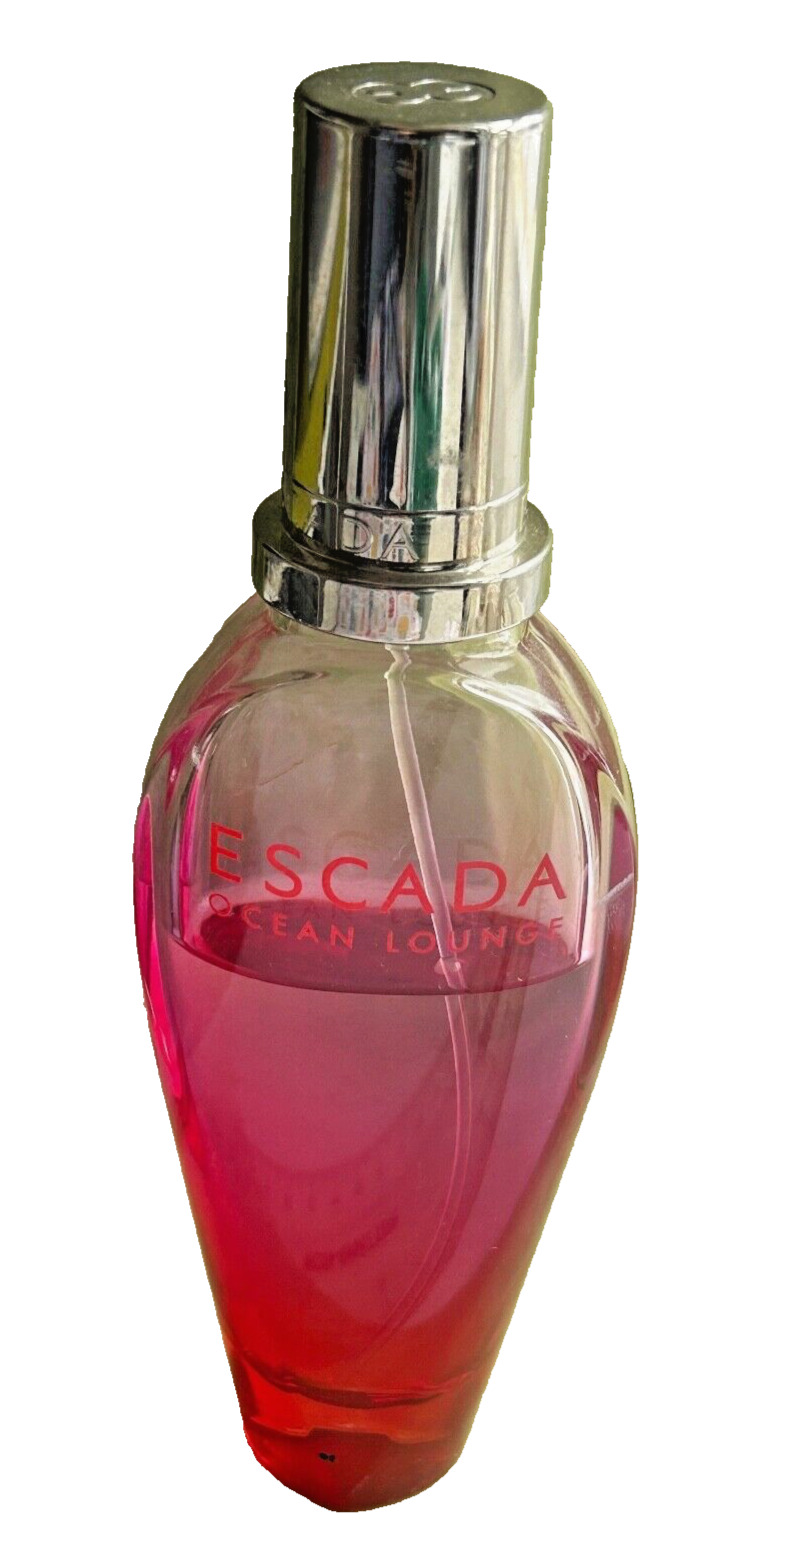 vtg Escada OCEAN LOUNGE Eau de Toilette EDT parfum perfume spray -  50 ml 1.7 oz